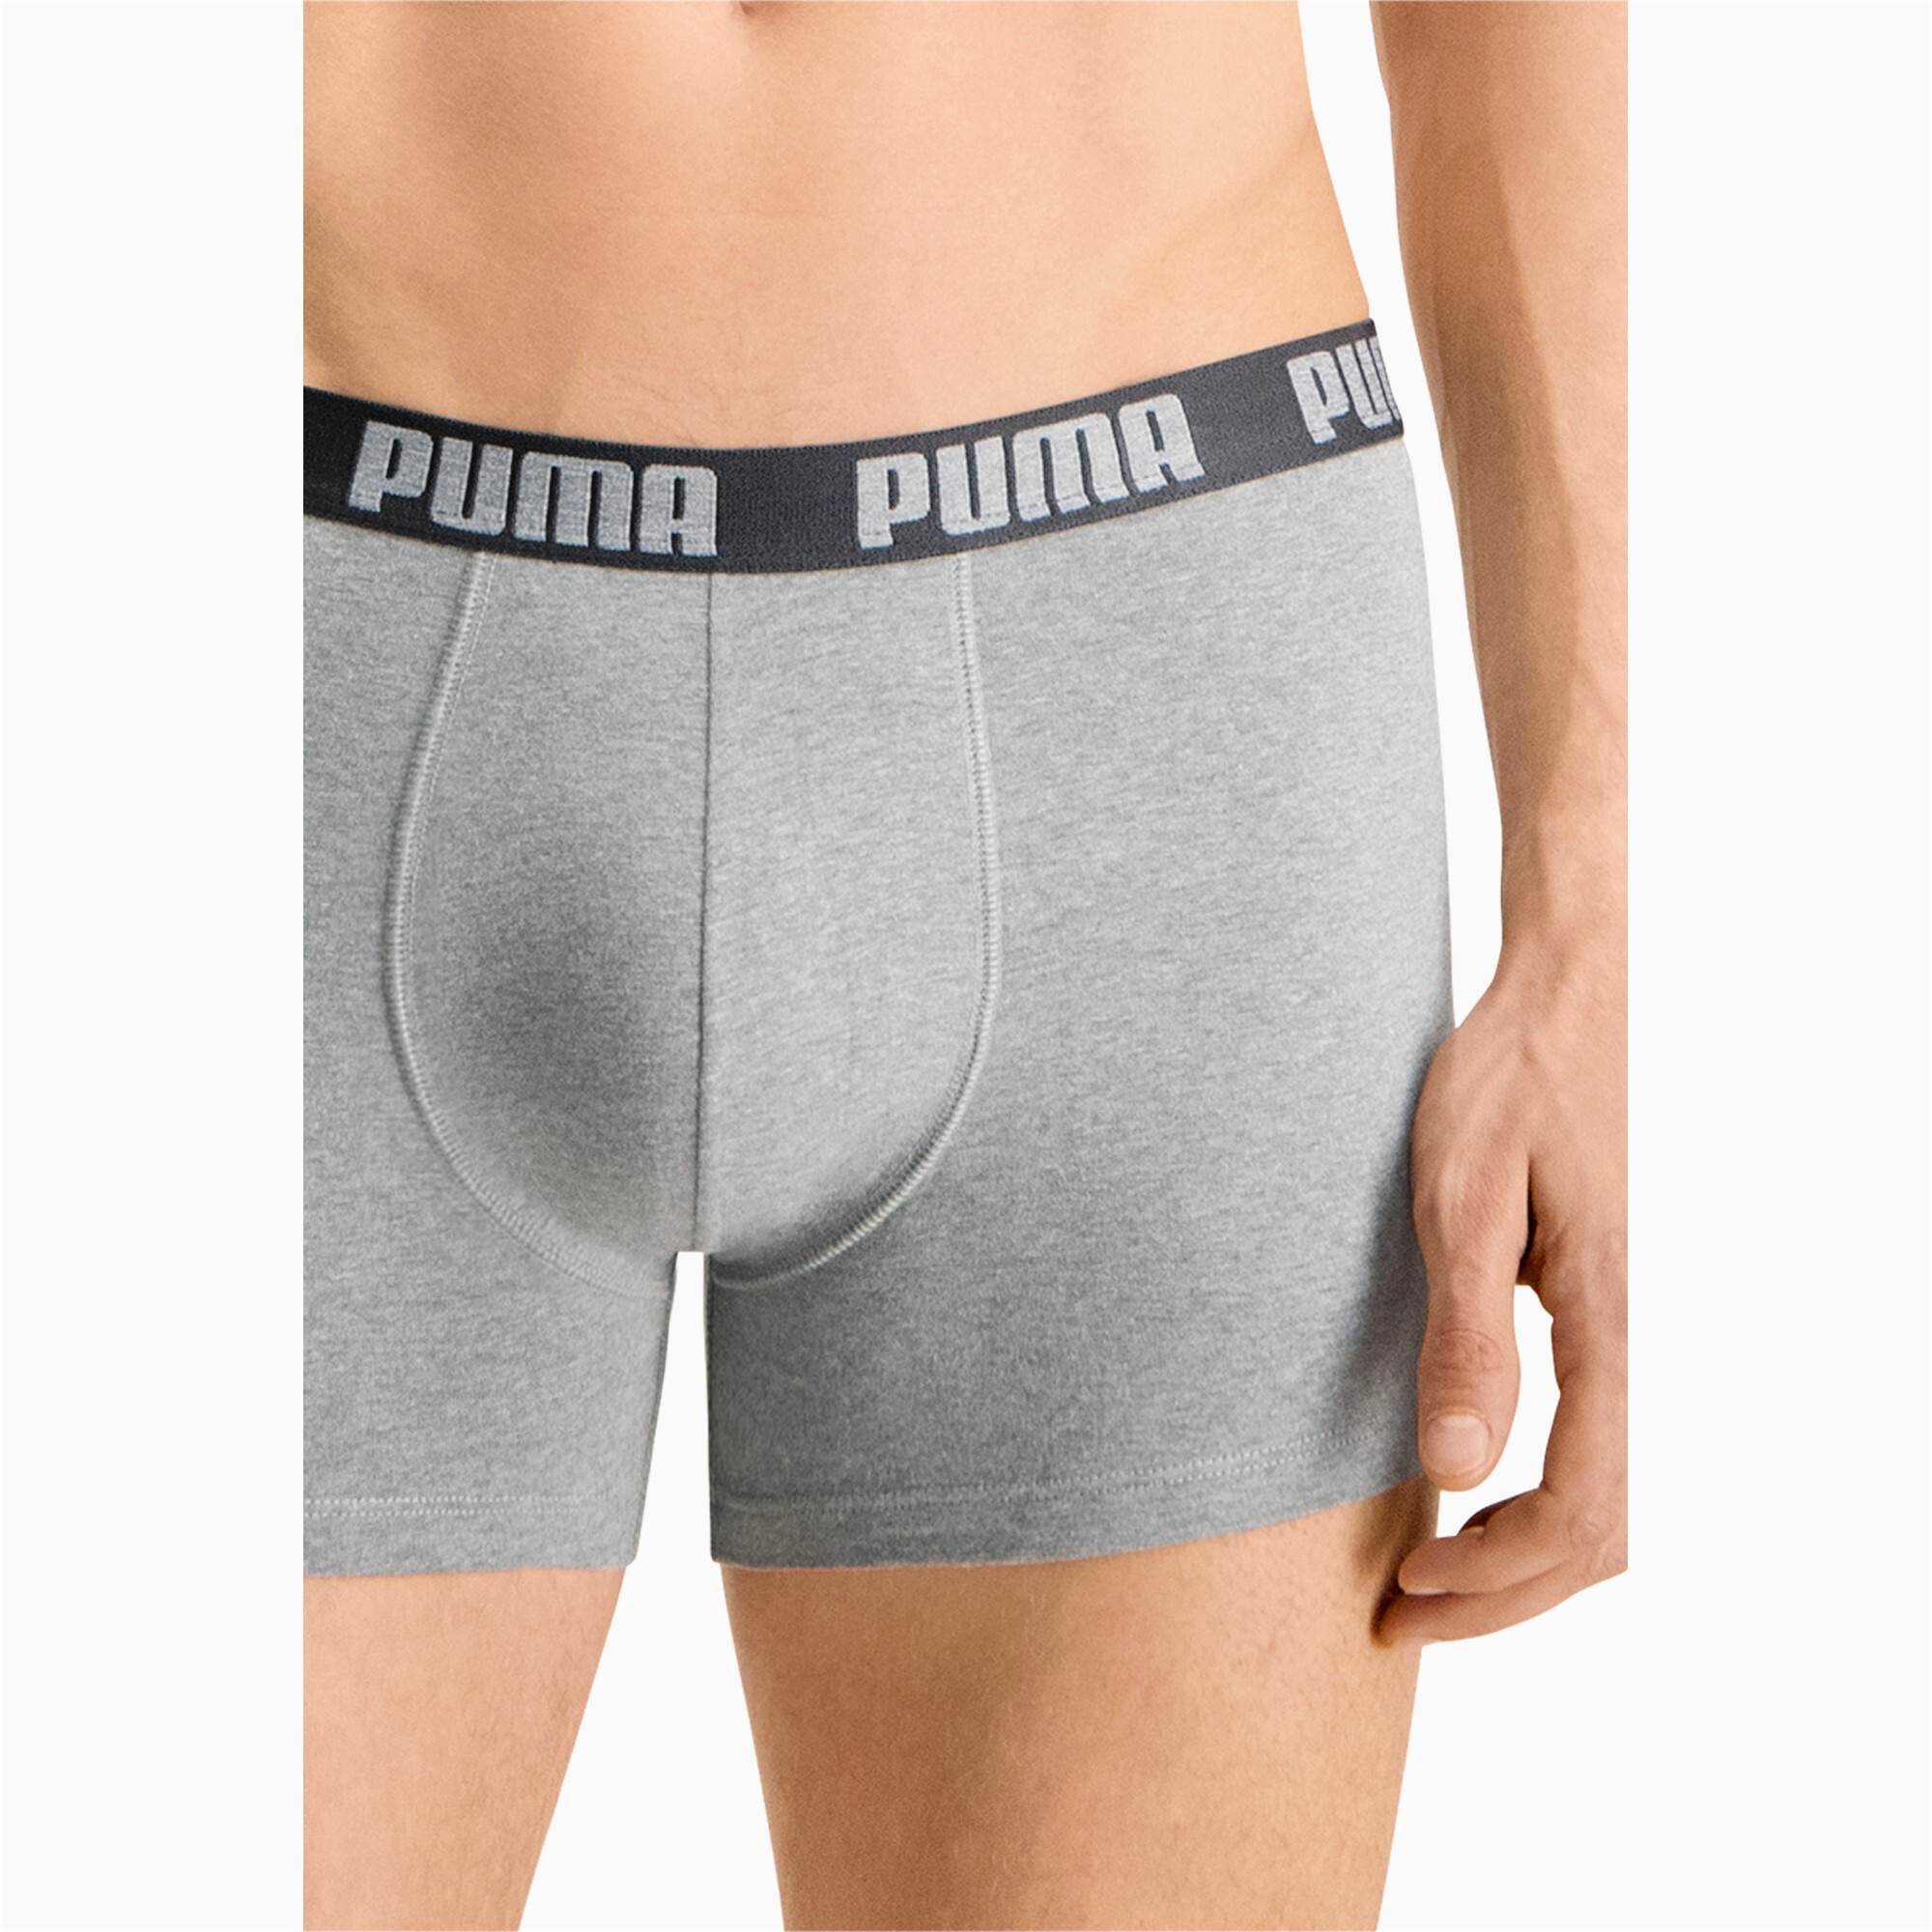 Men's PUMA Everyday Boxers 3 Pack In Black Grey Combo, Size Medium